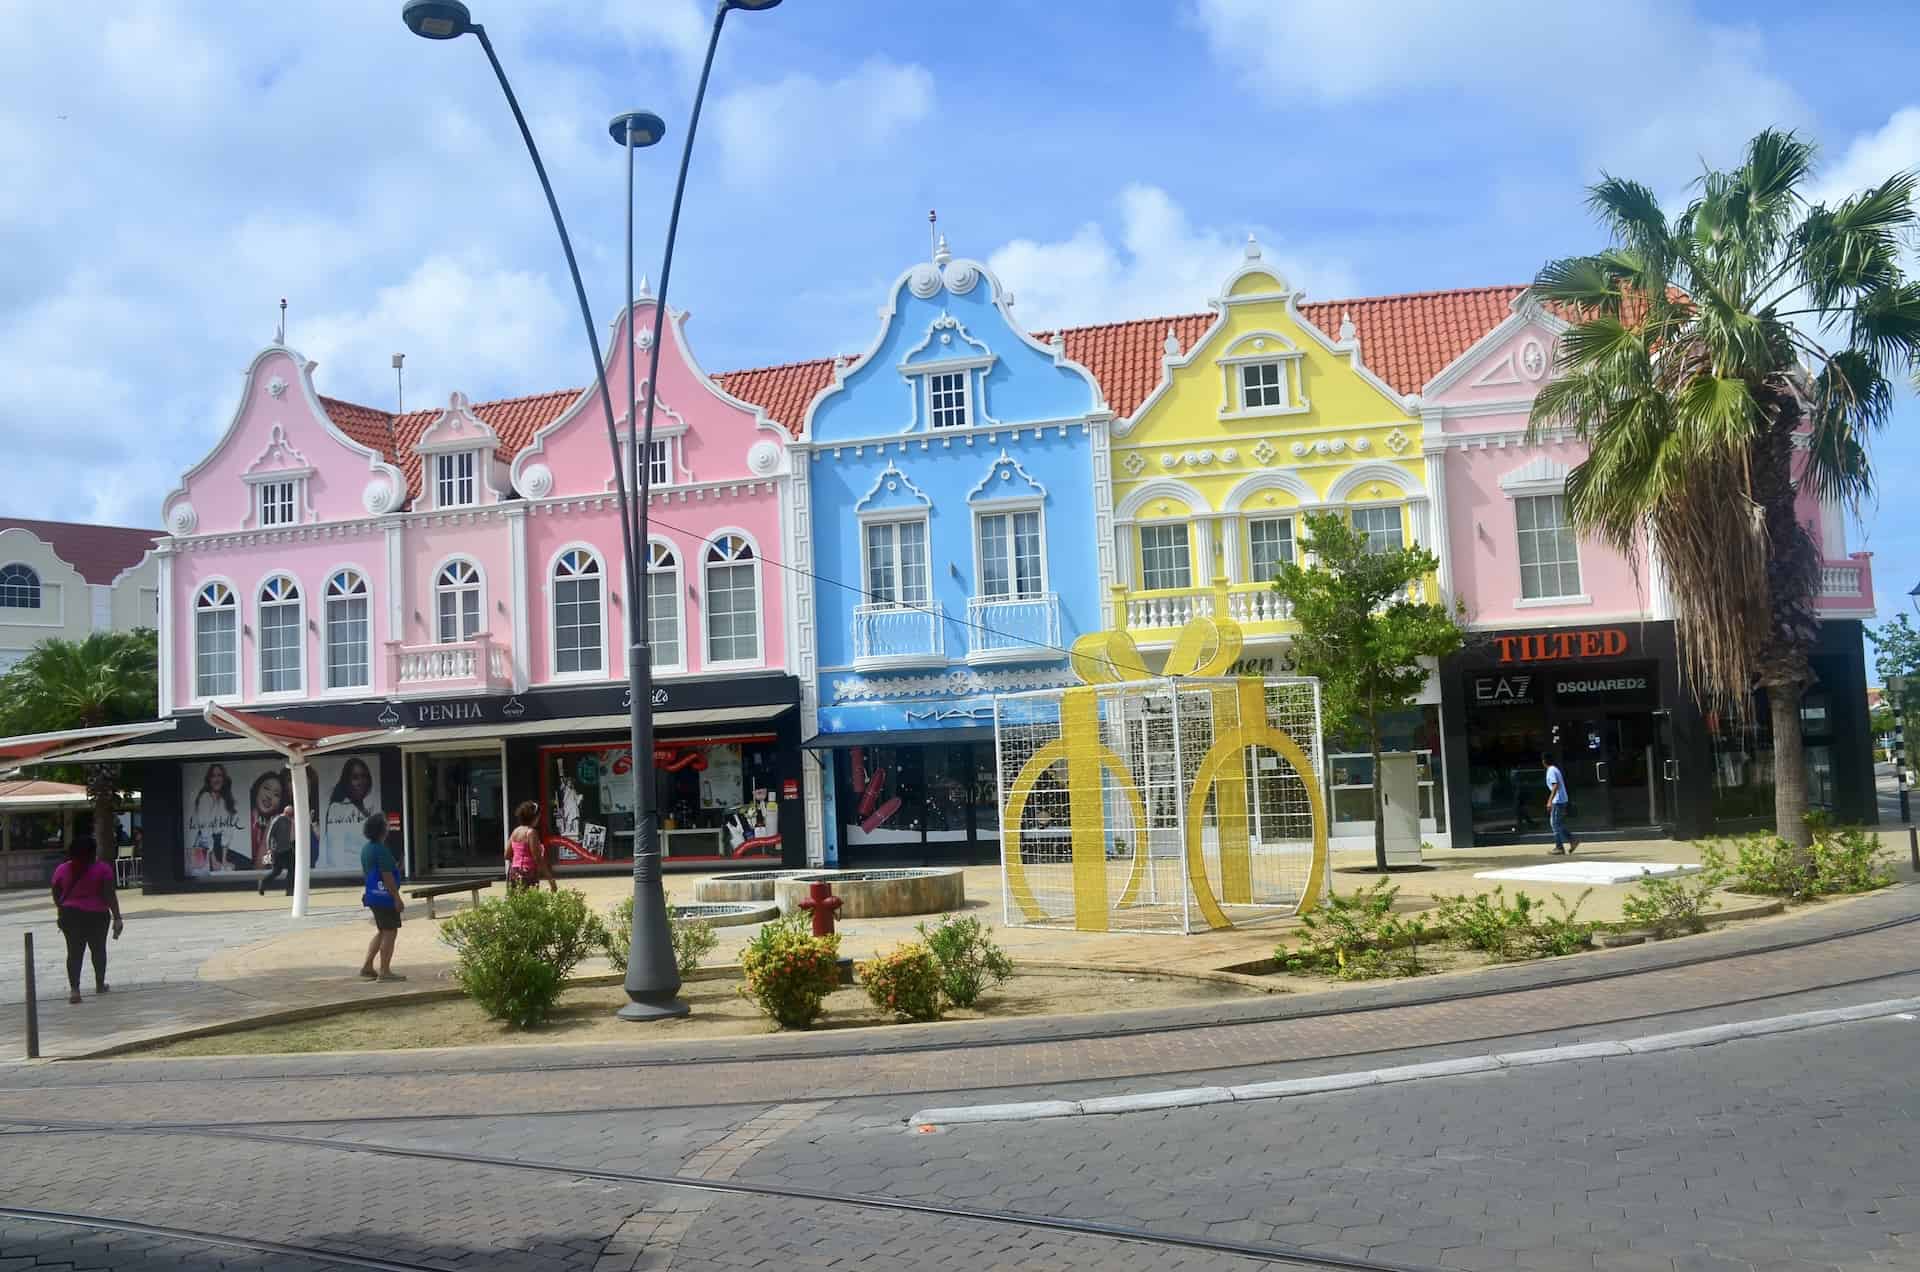 Dutch colonial buildings in Oranjestad, Aruba